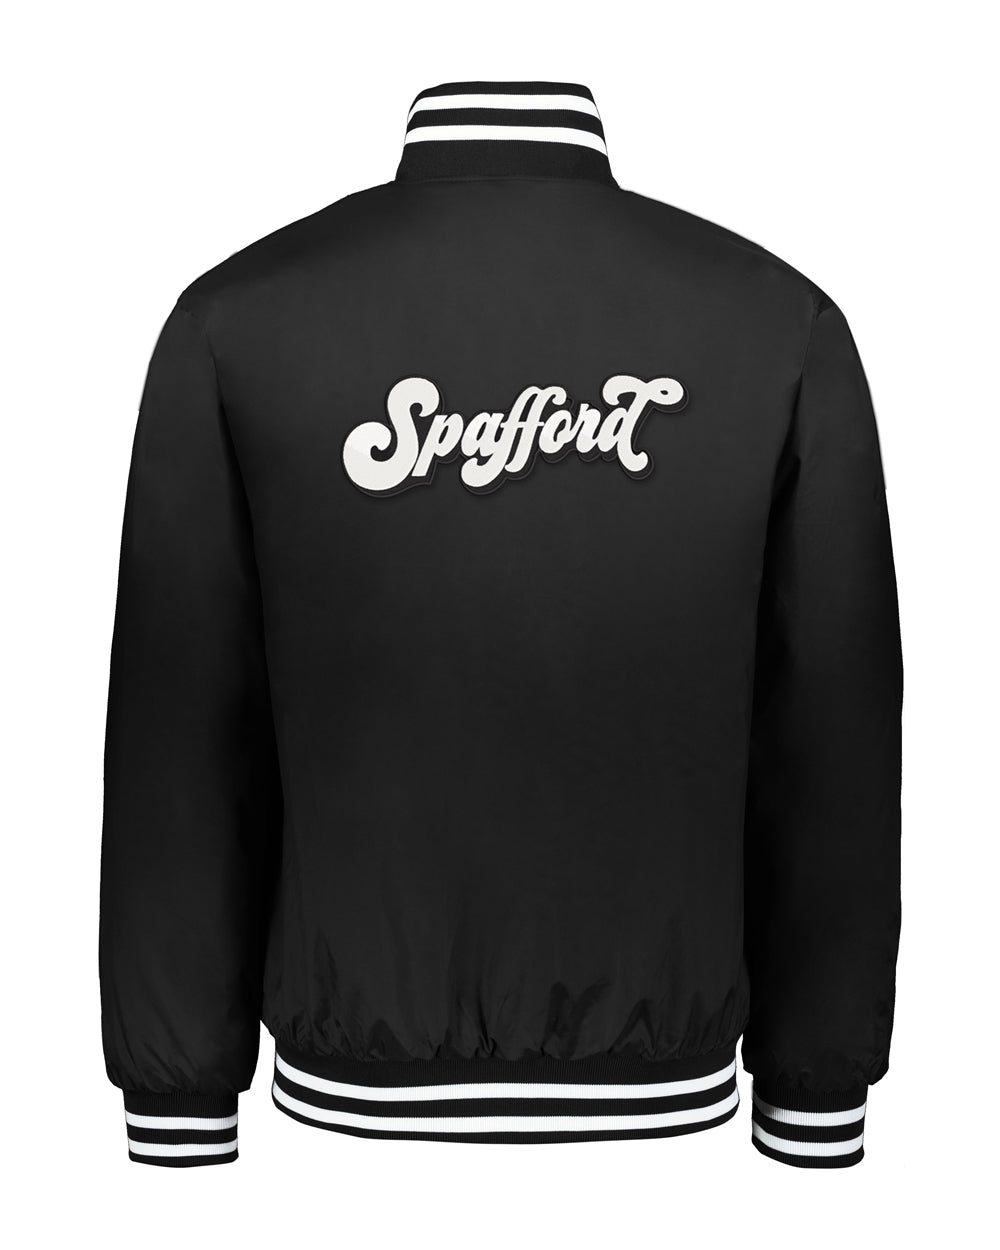 Spafford Heritage jacket - Black/White